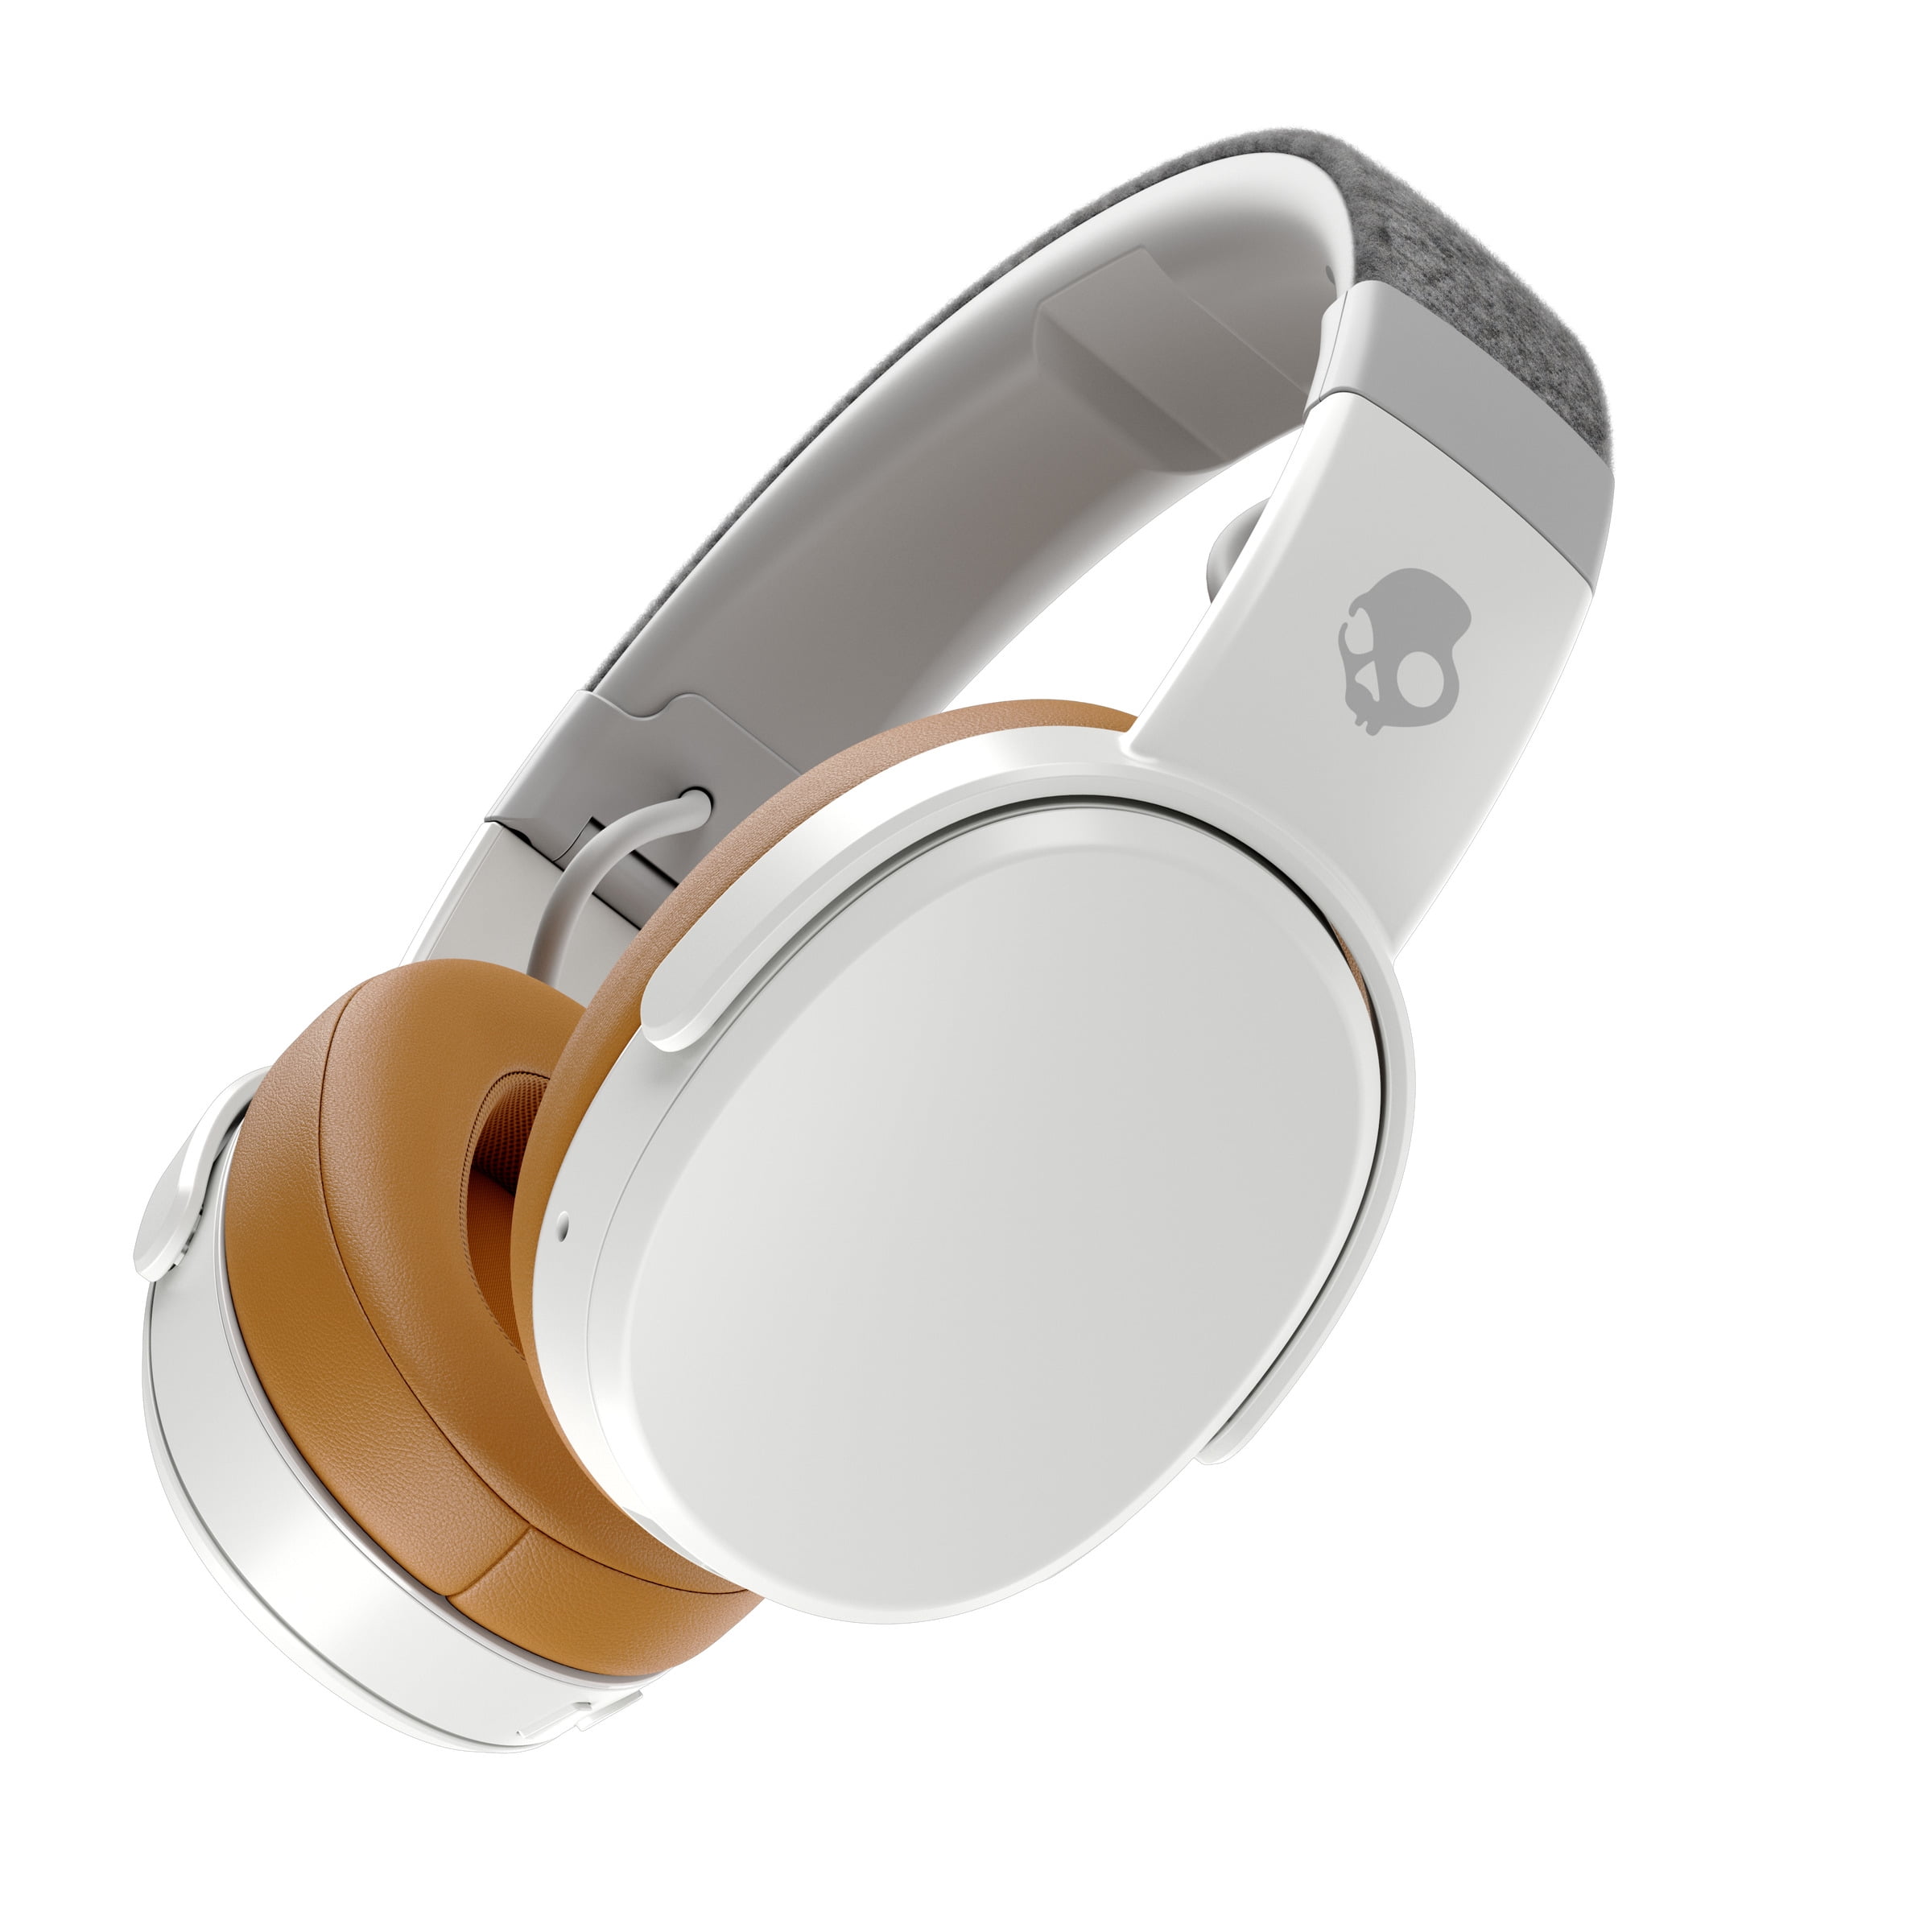 Skullcandy Crusher Bluetooth Over-Ear Headphones, Gray & Tan, S6CRW-K590